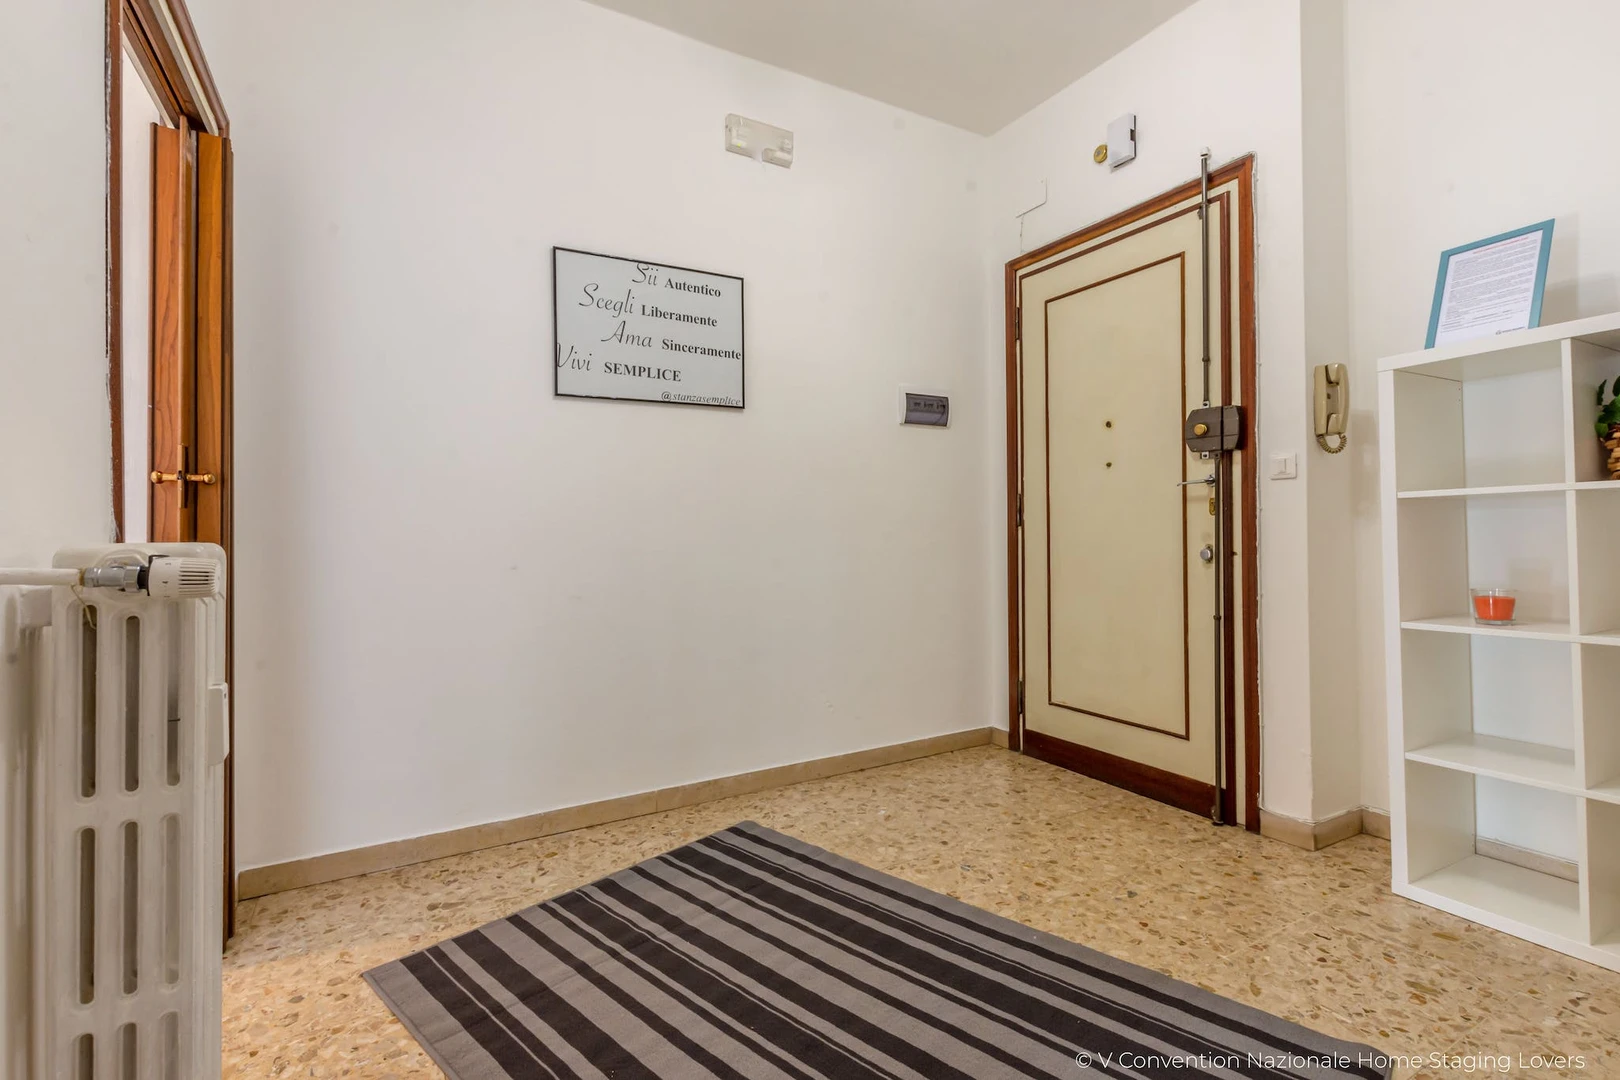 Cheap private room in Pisa